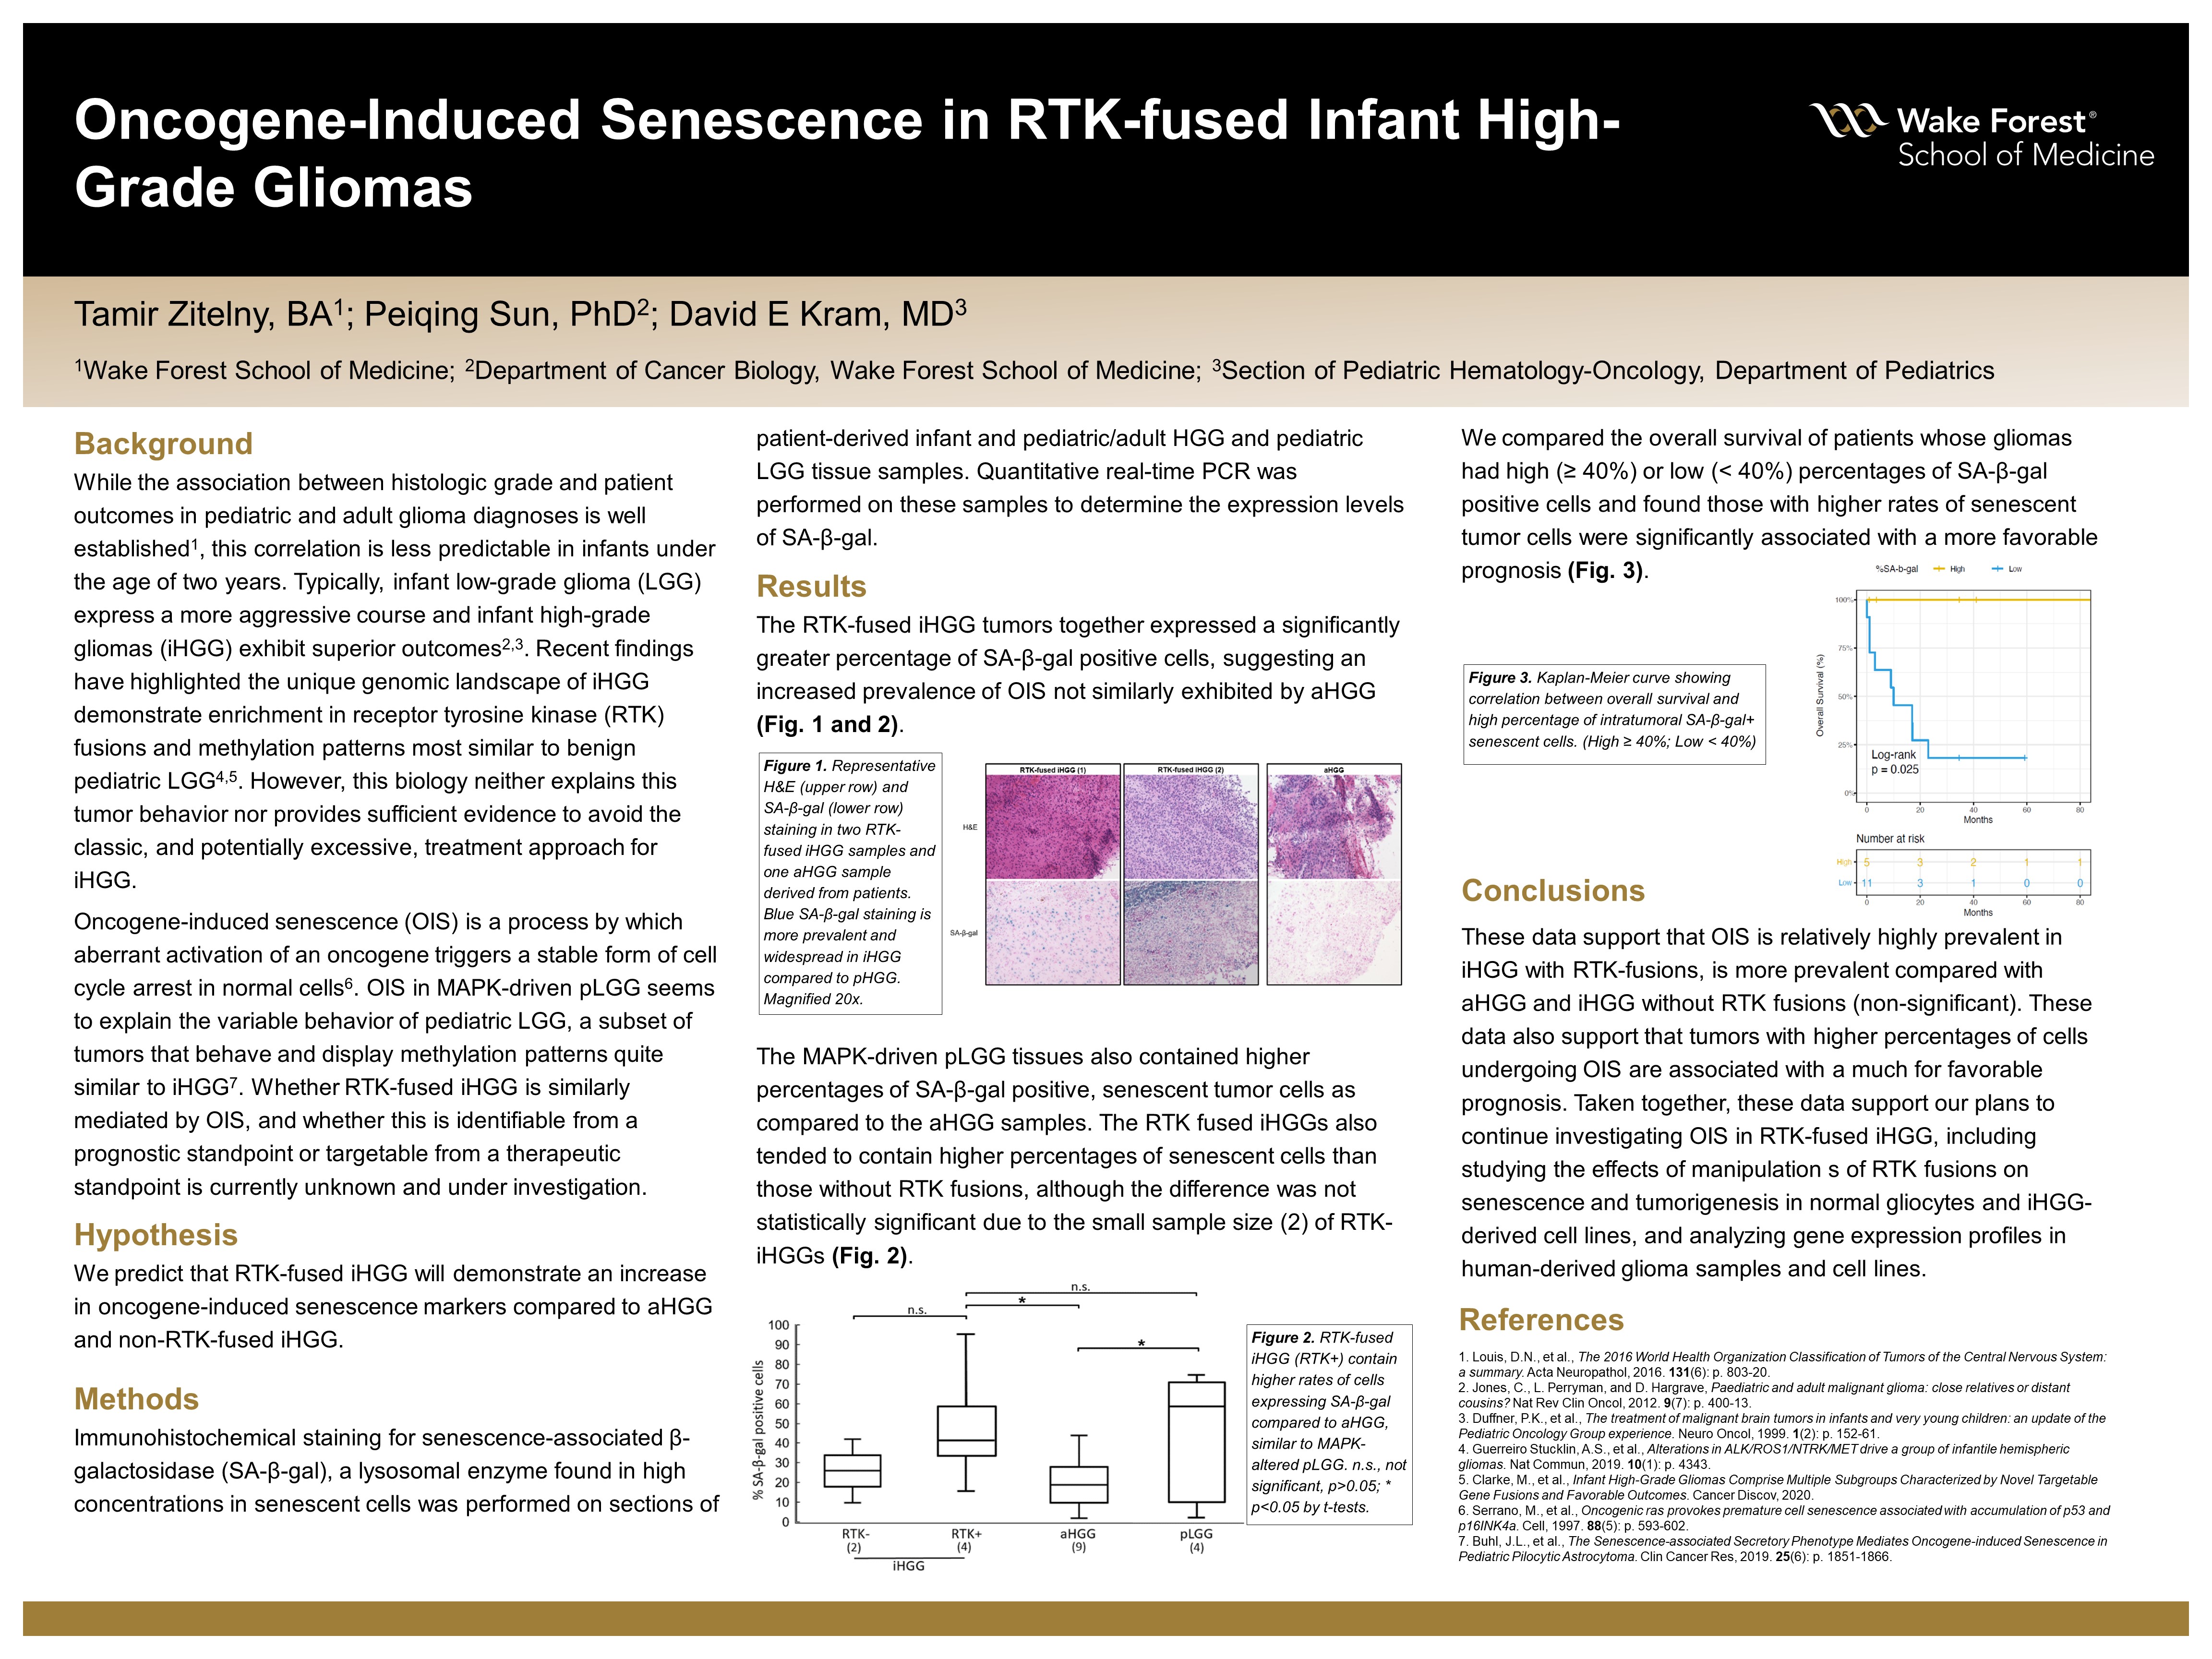 Showcase Image for Oncogene-Induced Senescence in RTK-fused Infant High Grade Gliomas